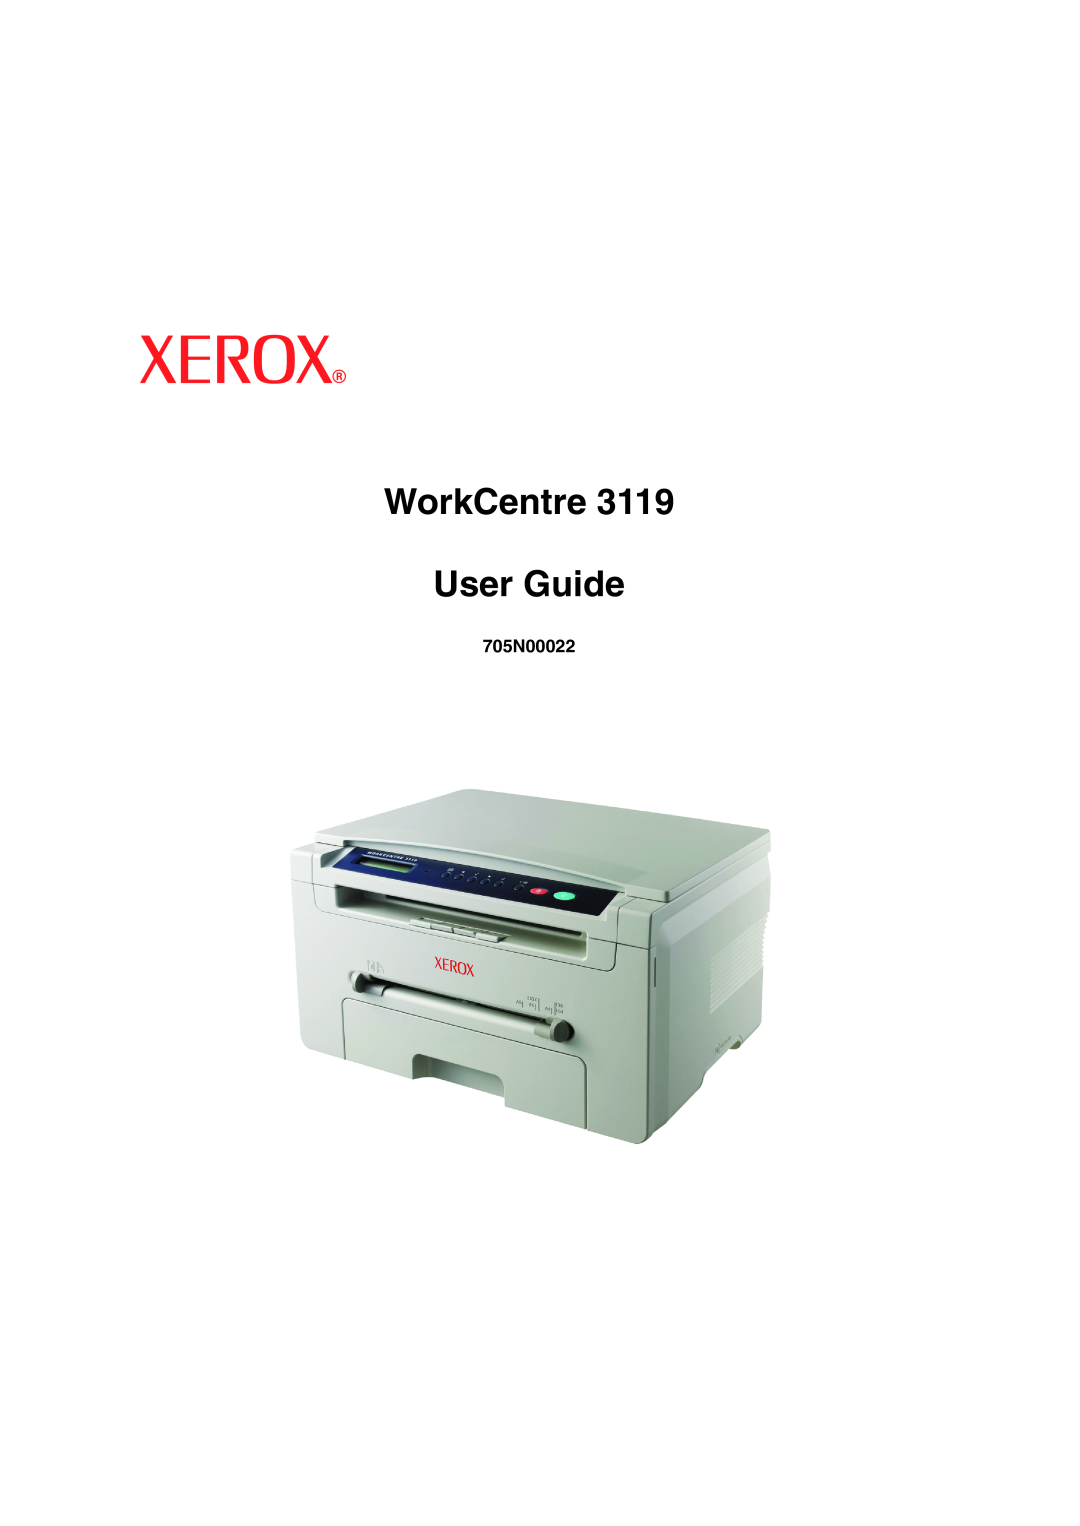 Xerox 3119 manual WorkCentre, User Guide, 705N00022 